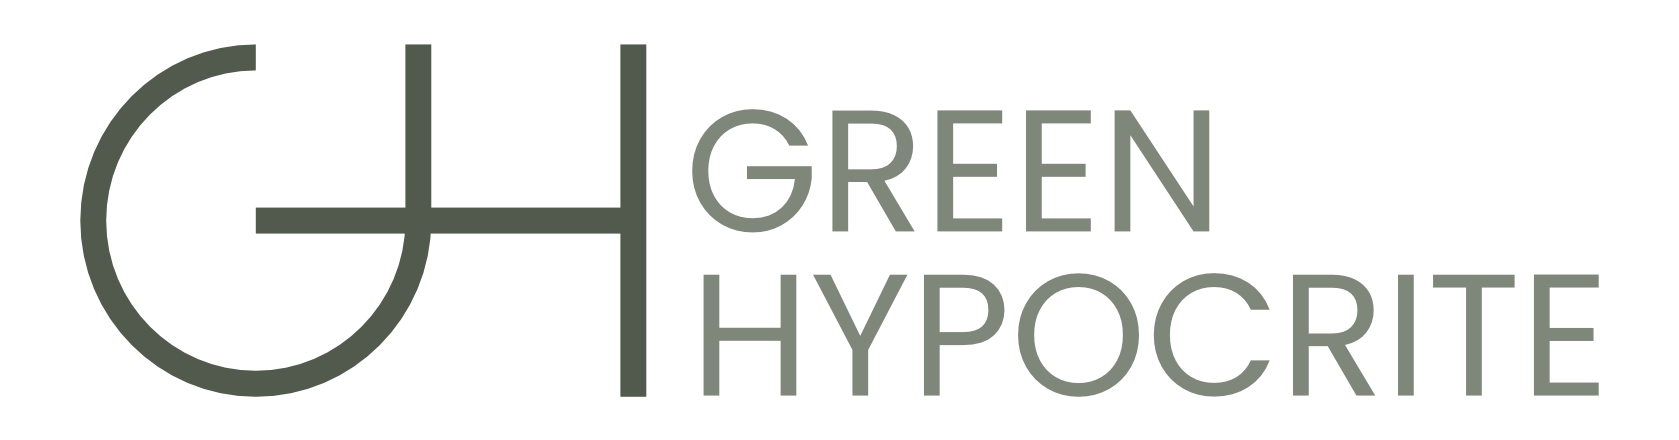 green hypocrite